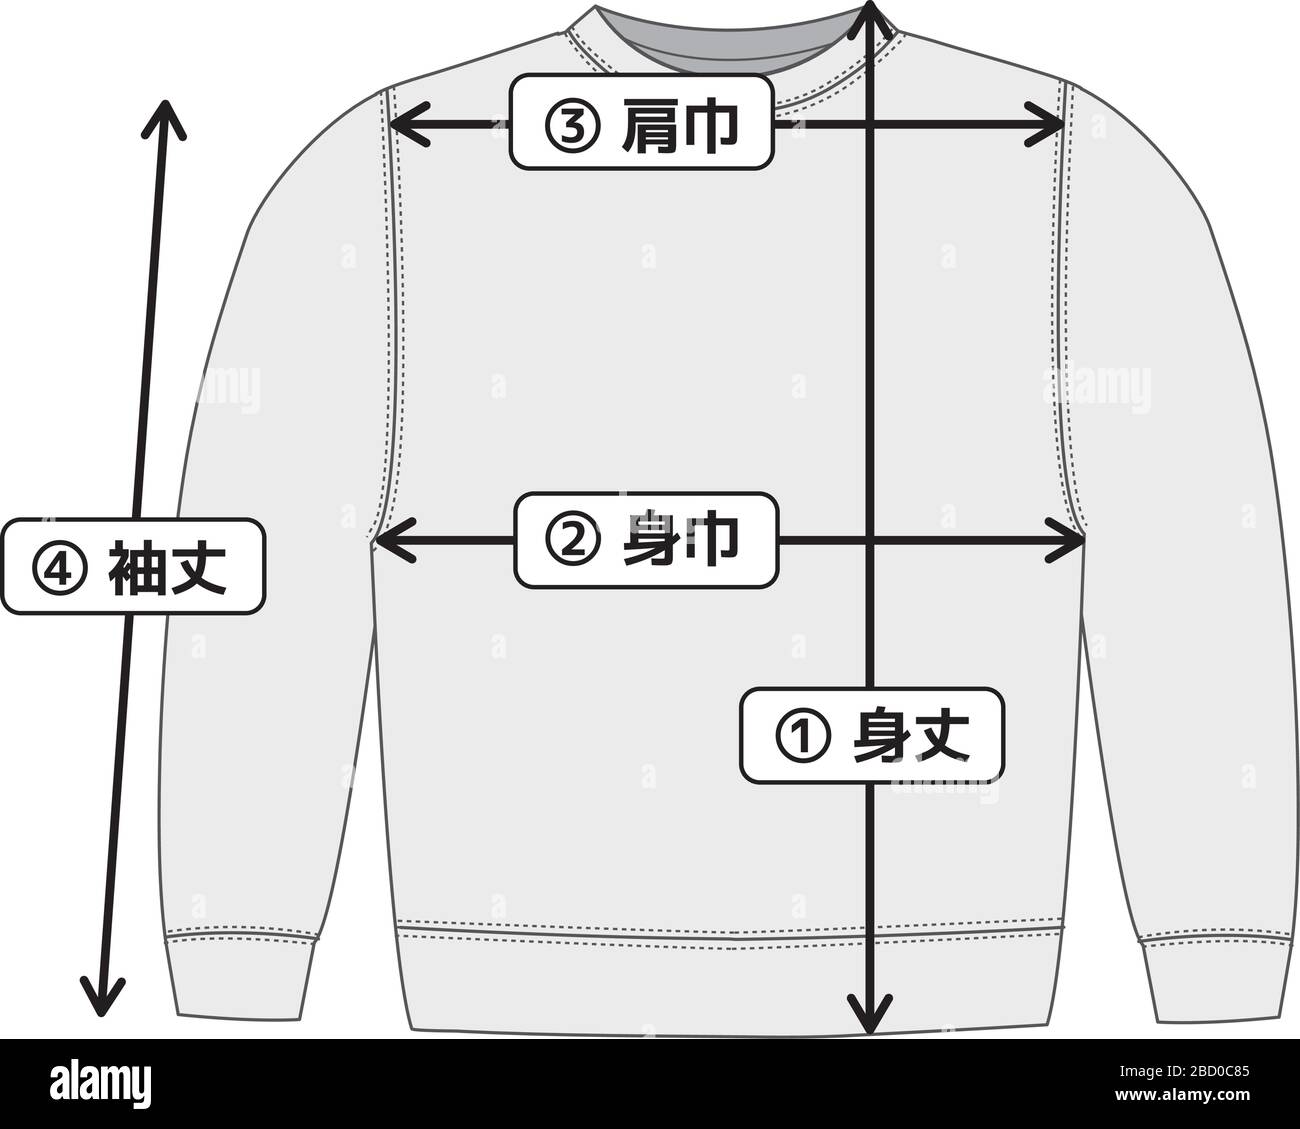 sweatshirt illustration for size chart Stock Vector Image & Art - Alamy